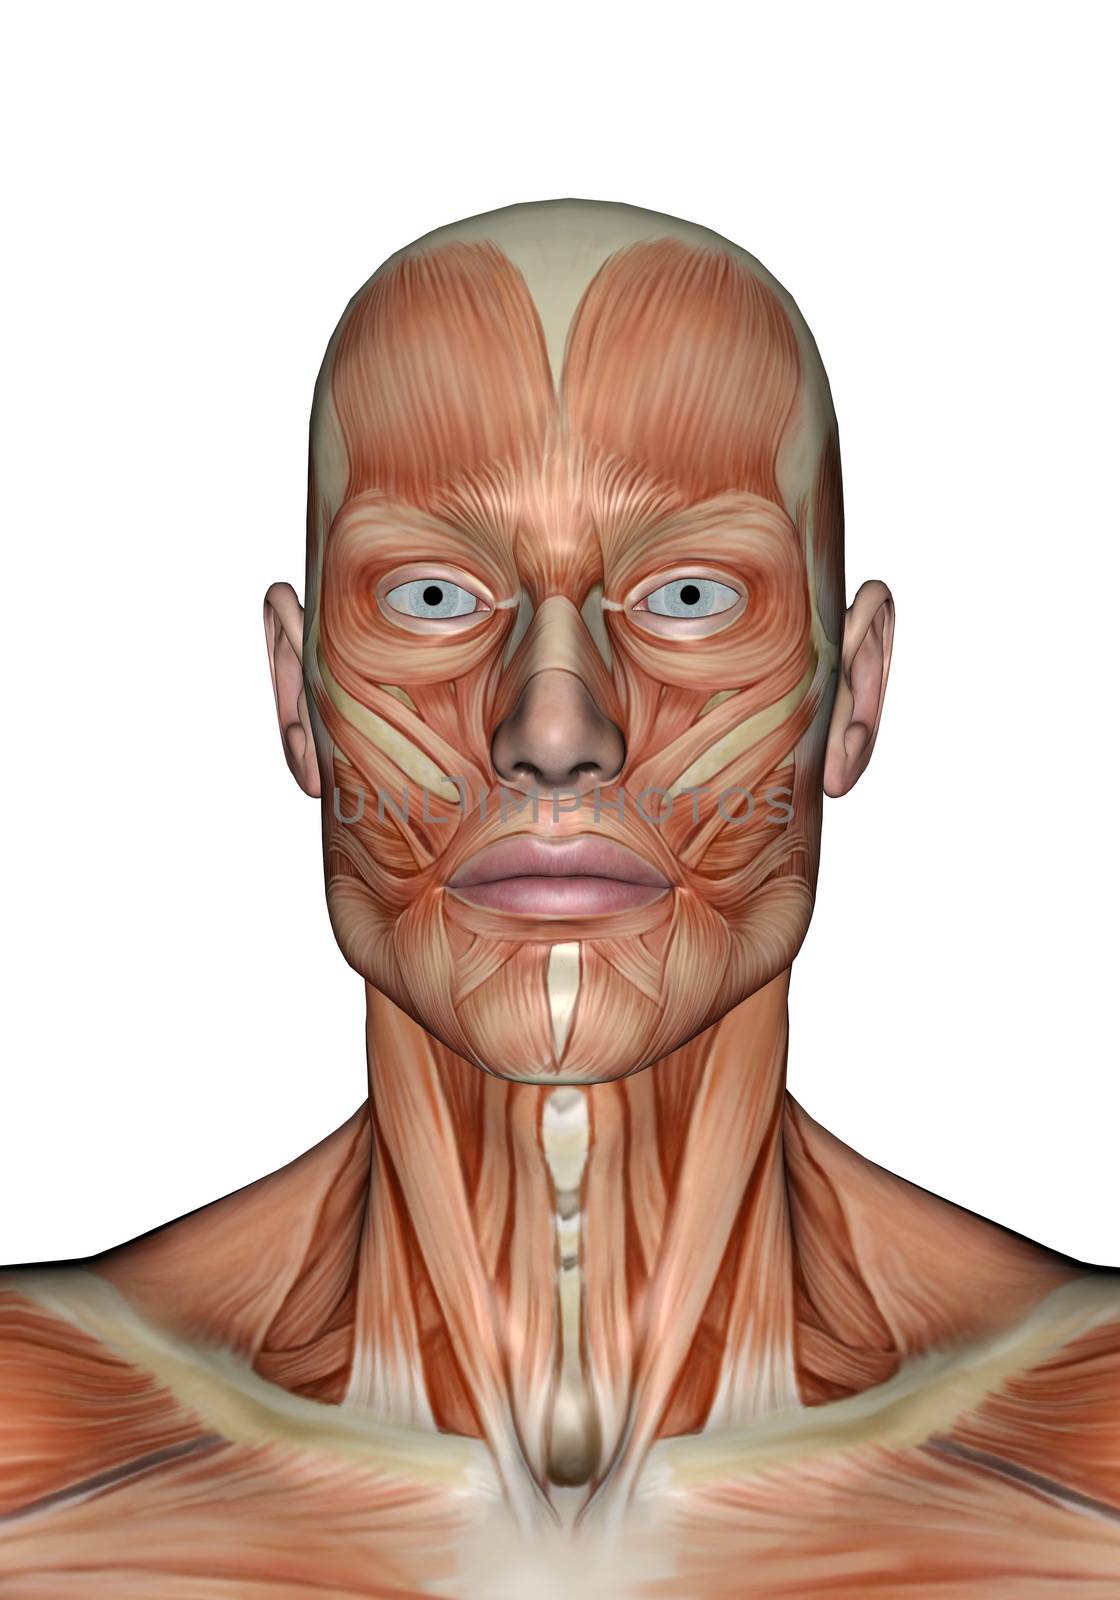 Head muscles of man - 3D render by Elenaphotos21